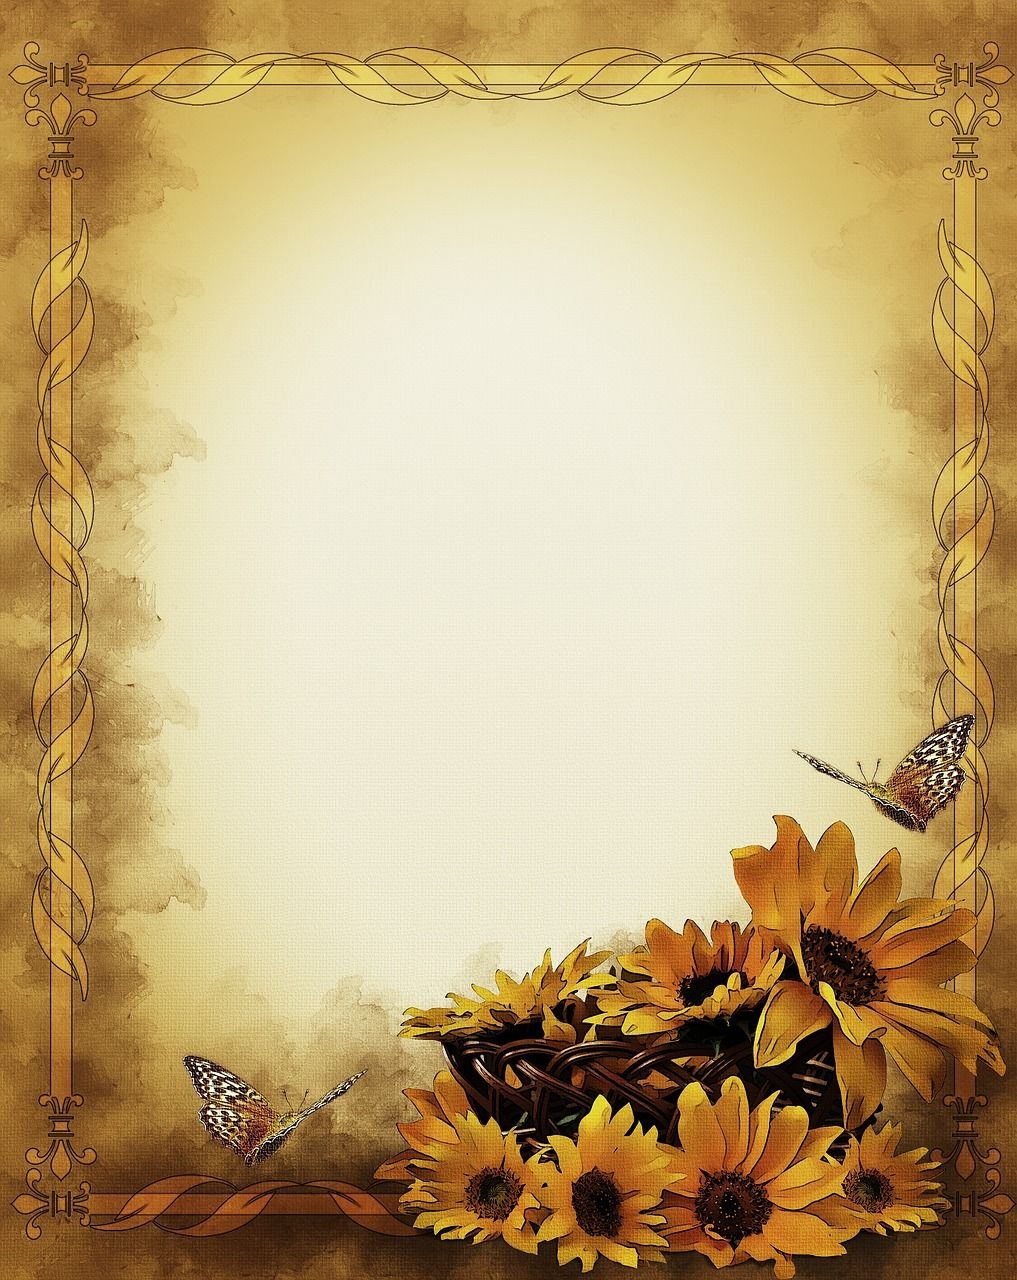 Free Image On Pixabay - Sunflowers, Still Life, Frame | Bridal - Free Printable Sunflower Stationery